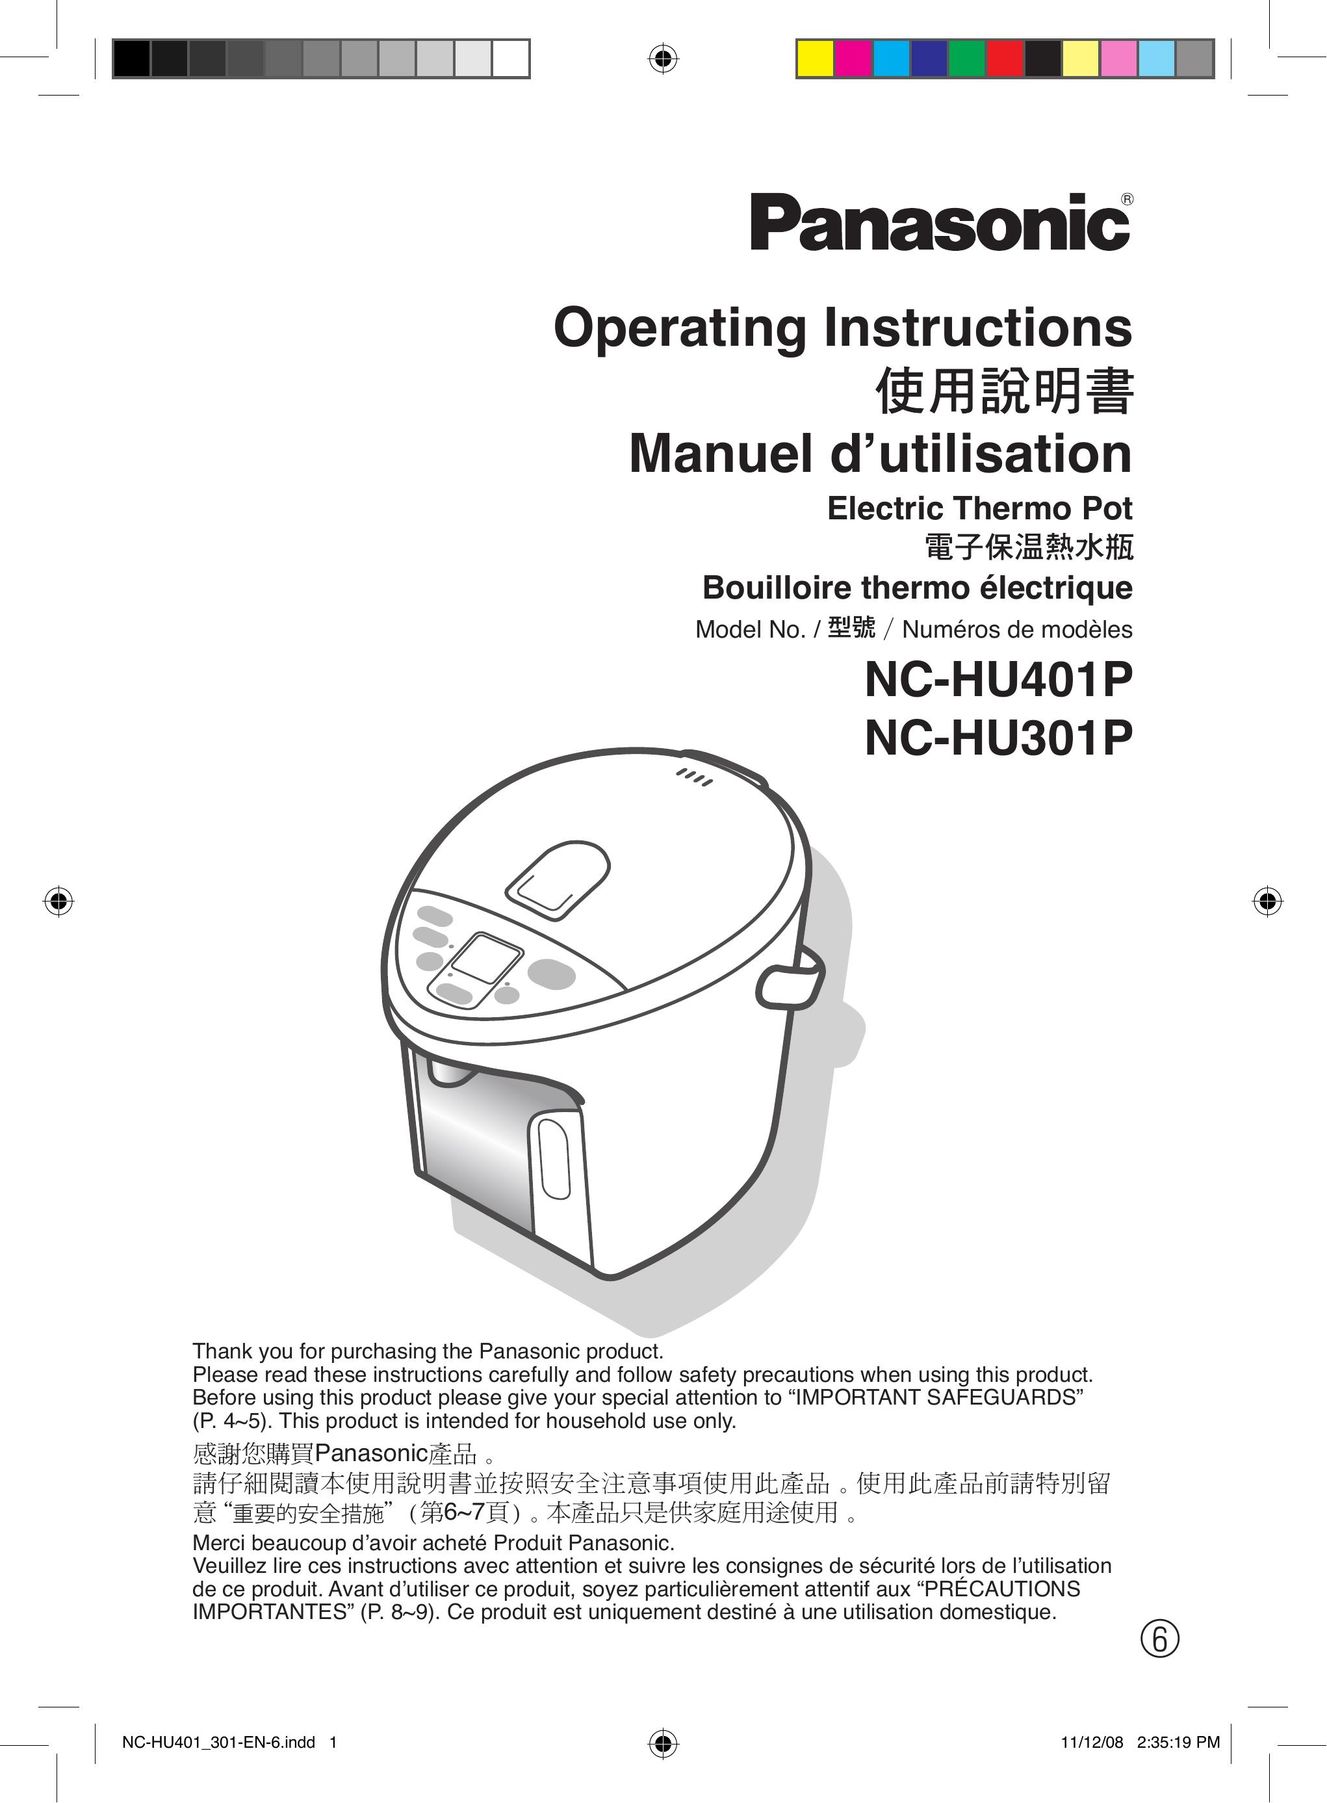 Panasonic NC-HU401P Hot Beverage Maker User Manual